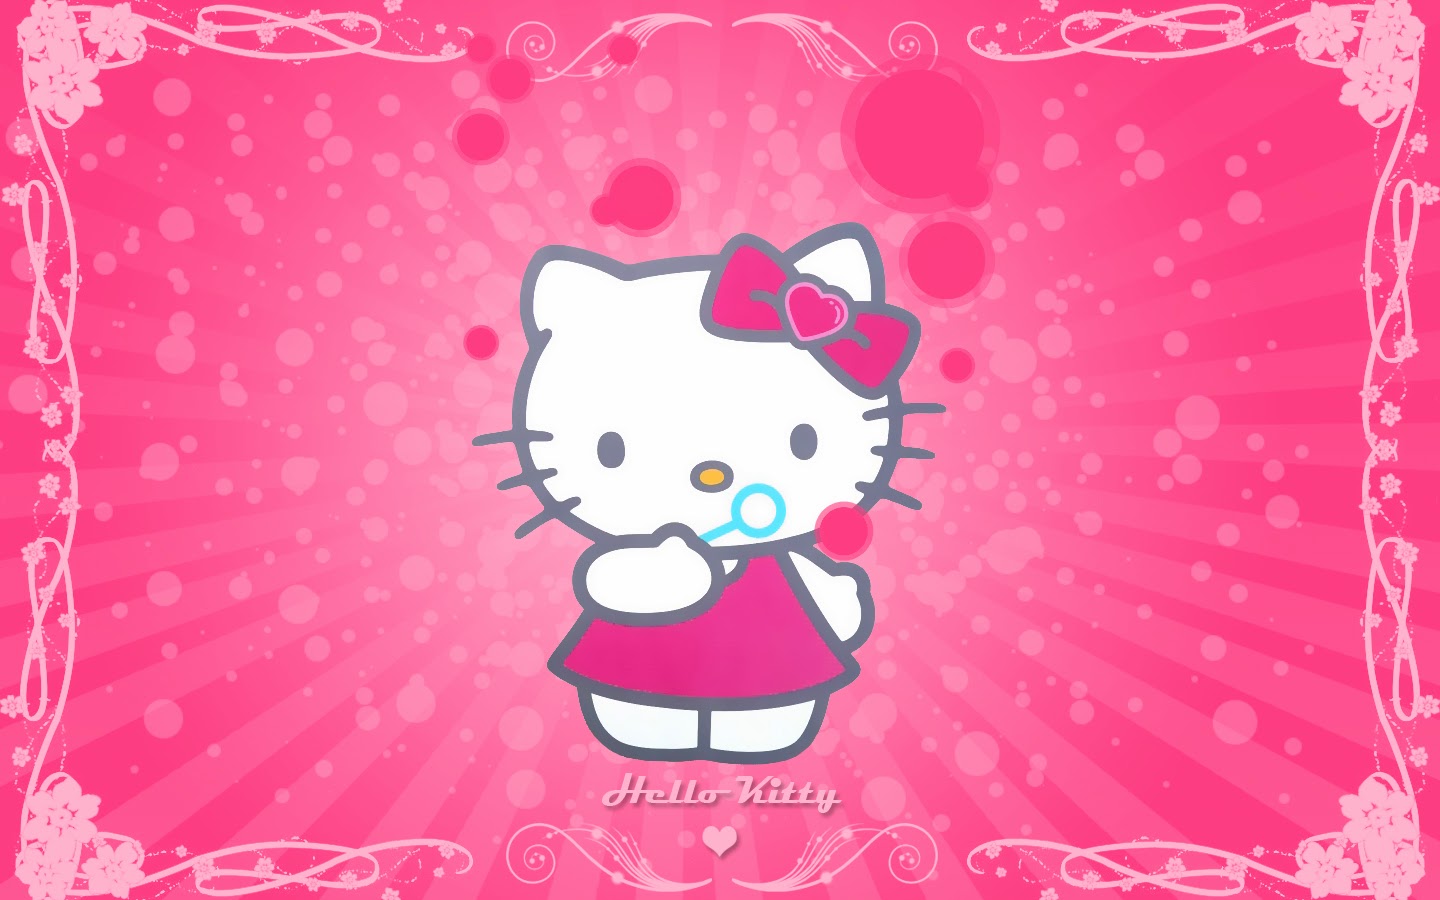 ImagesListcom Hello Kitty Images Part 4